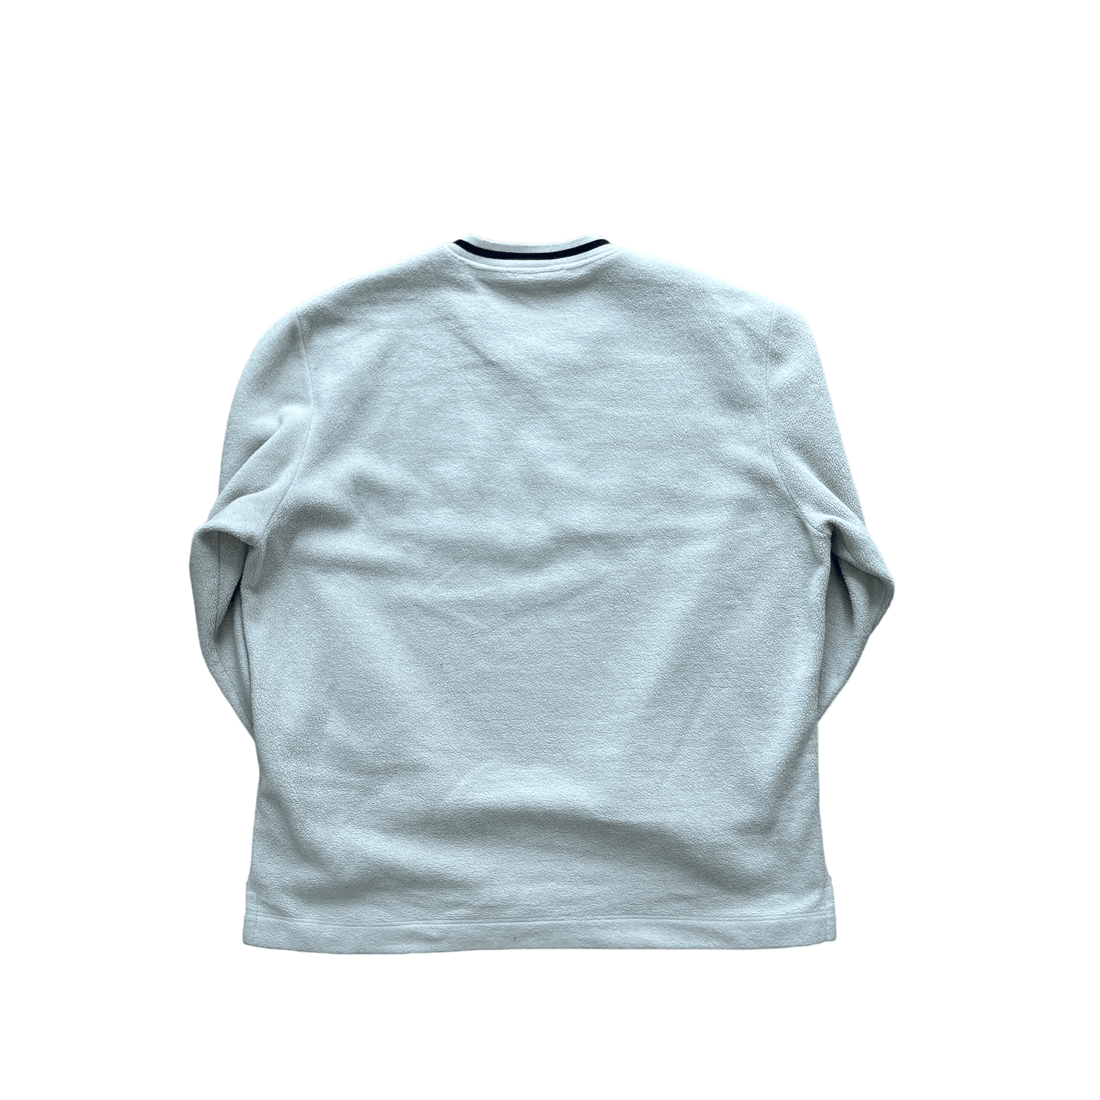 Vintage Cream Fila Fleece Sweatshirt - Large - The Streetwear Studio